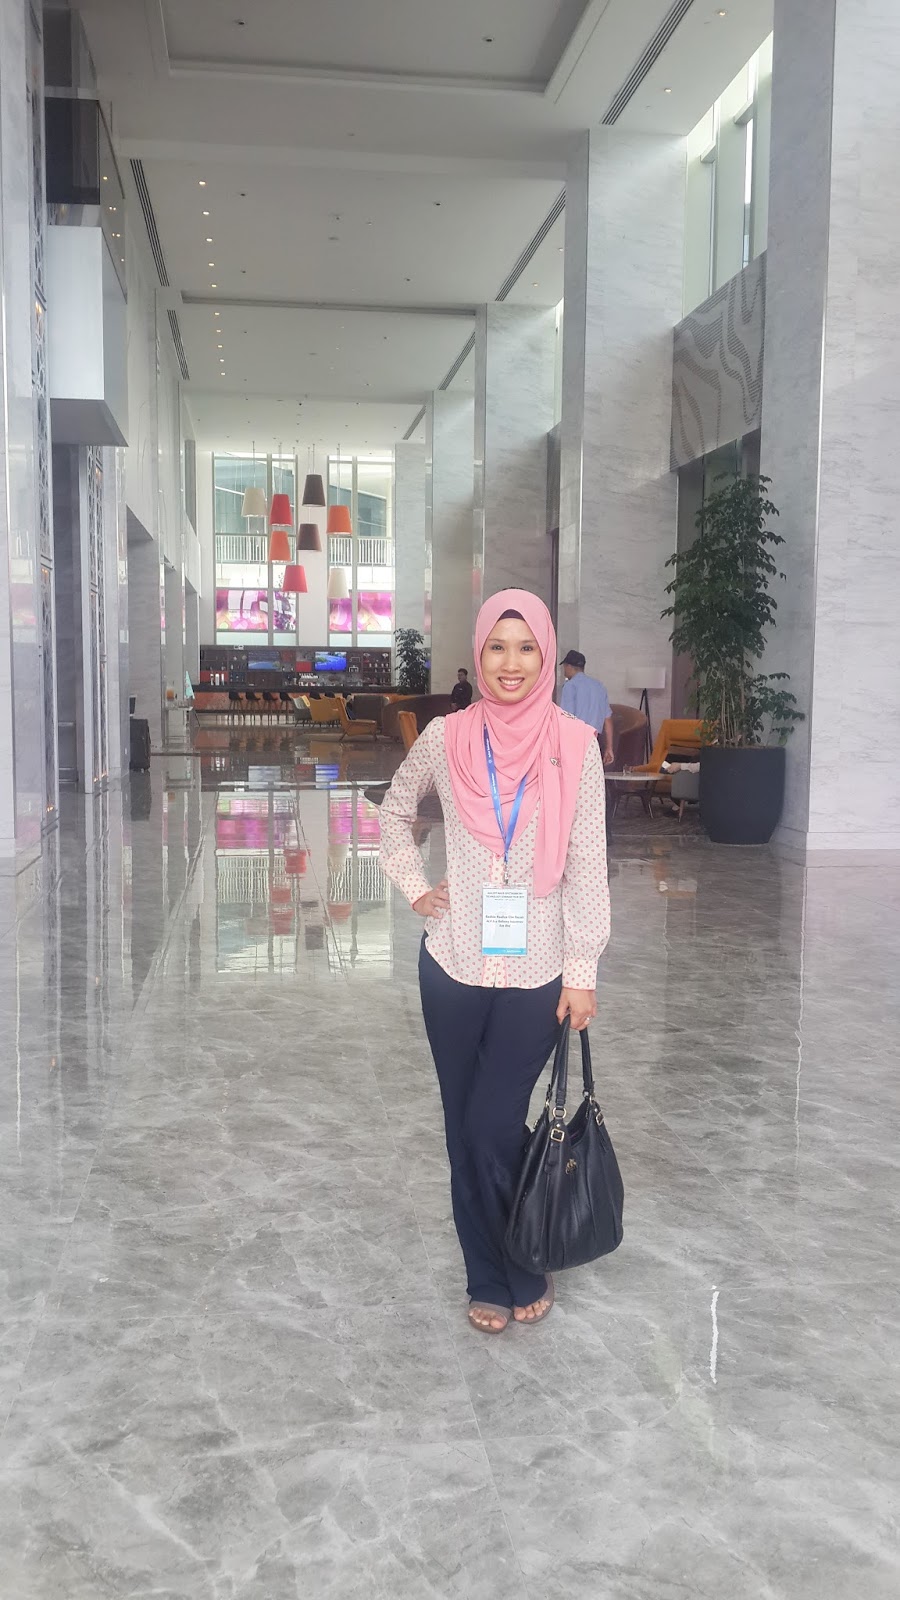 The People I Met & The Story I Heard During Agilent MS Technology Seminar At Le Meridien Putrajaya